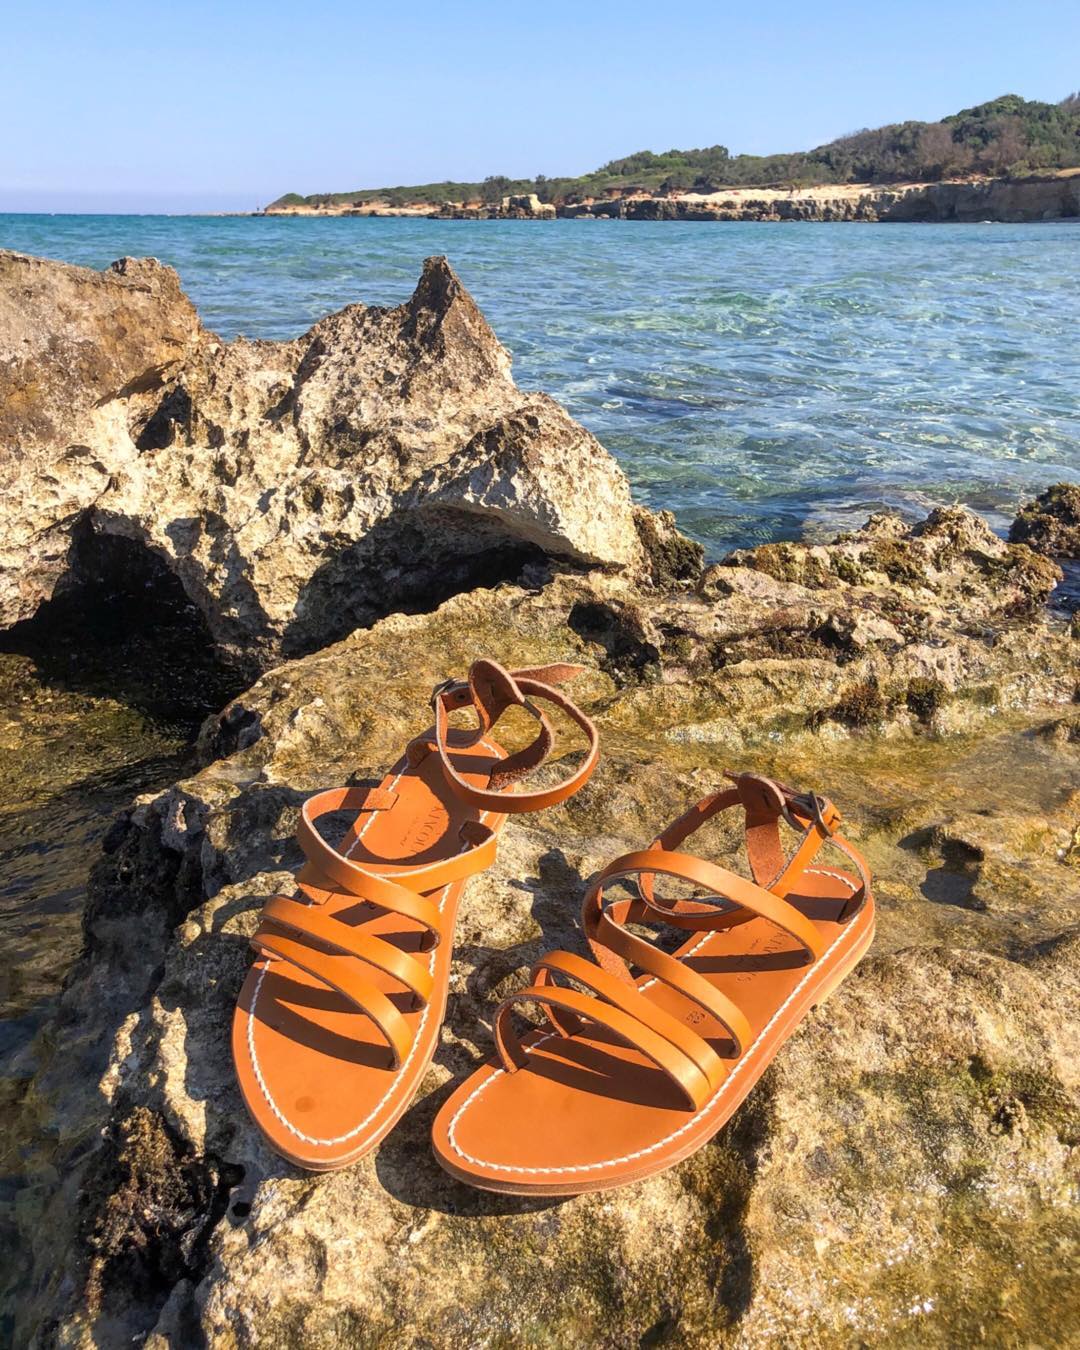 Antipolis Naturel Sandals